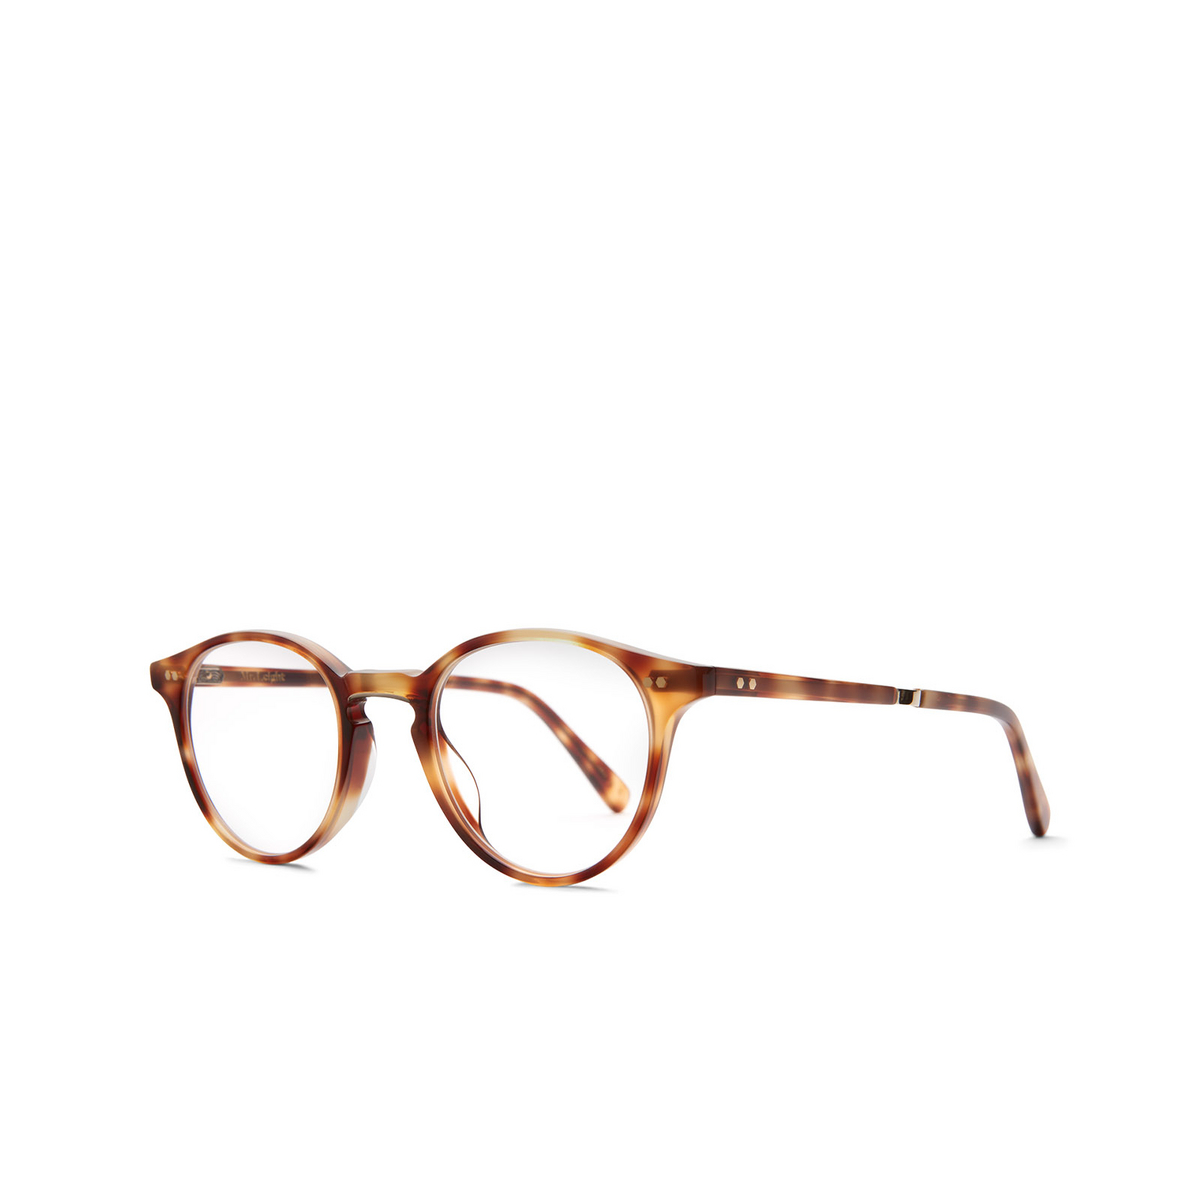 Mr. Leight MARMONT C Eyeglasses CALT-12KG Calico Tortoise-12K White Gold - three-quarters view